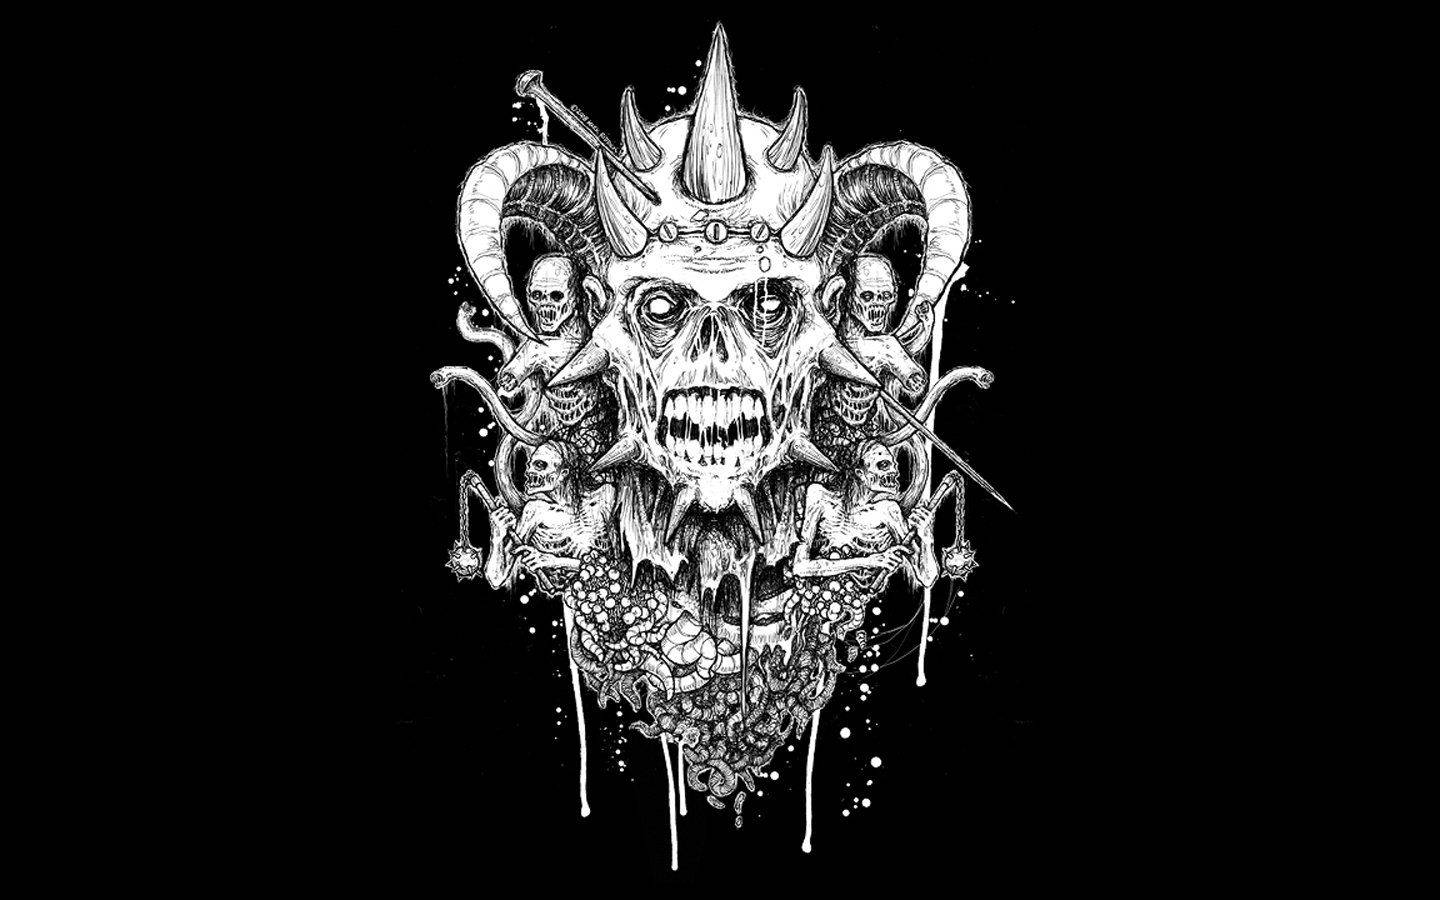 Satanic 1440X900 Wallpaper and Background Image